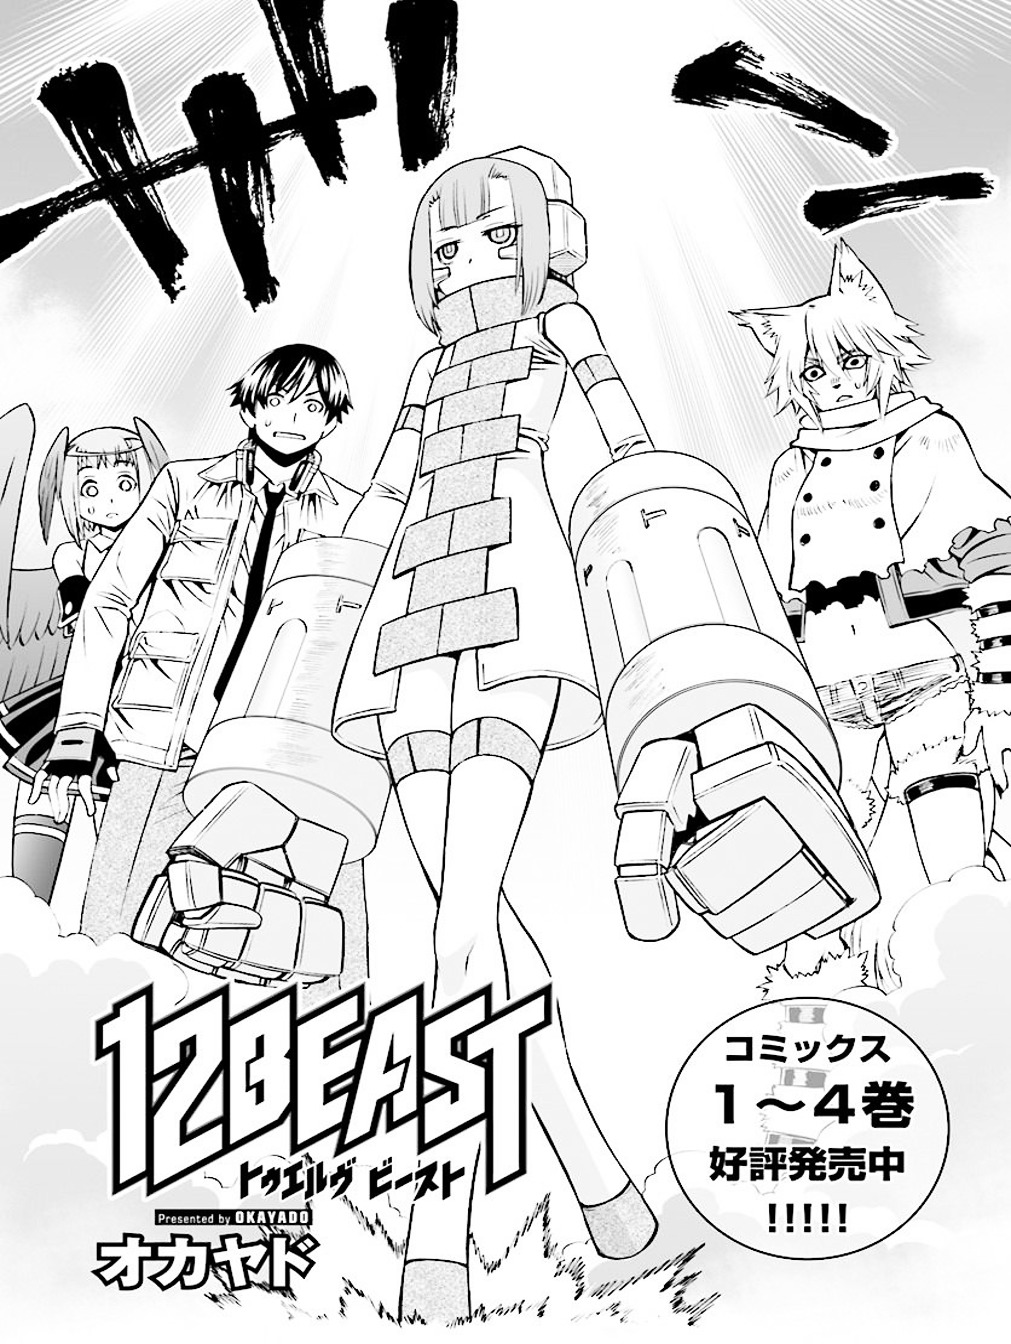 12 Beast - Page 2